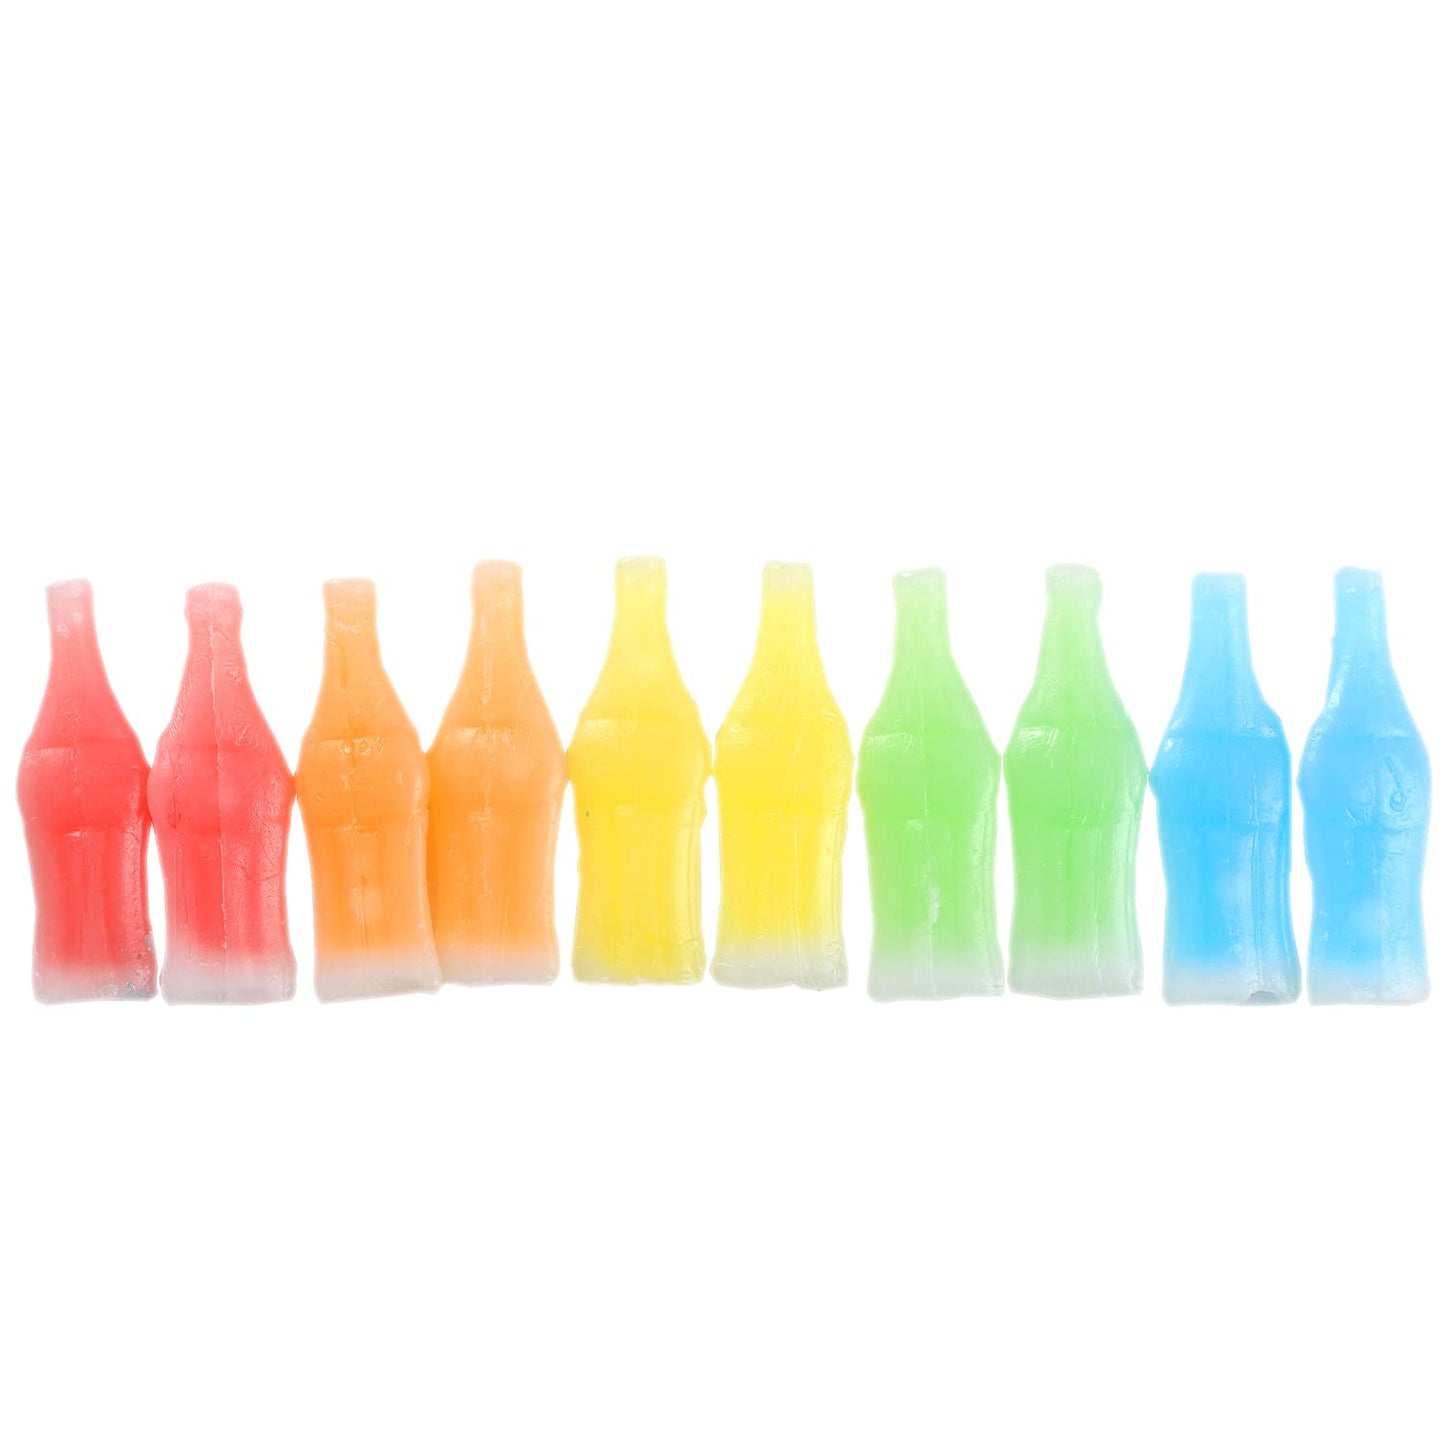 Wax Bottle Candy - Juice-filled Wax Bottles - Soda Pop Candy - Novelty Candy - Bulk Candy - 2.9 Pounds